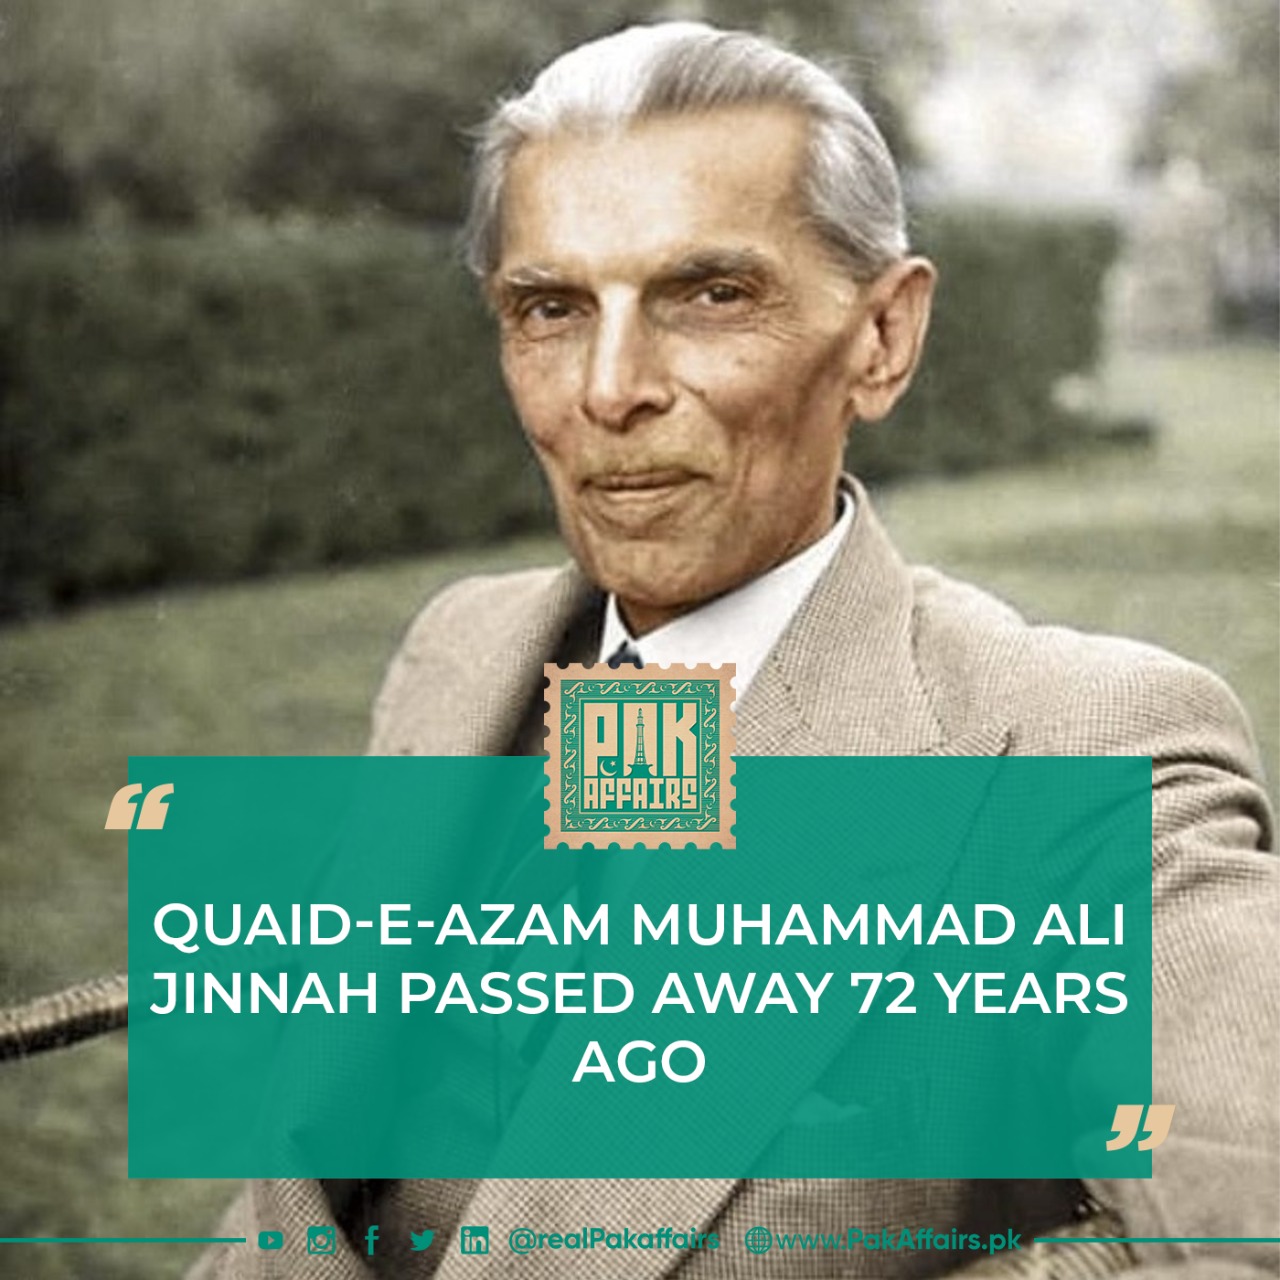 Quaid-e-Azam Muhammad Ali Jinnah passed away 72 years ago.